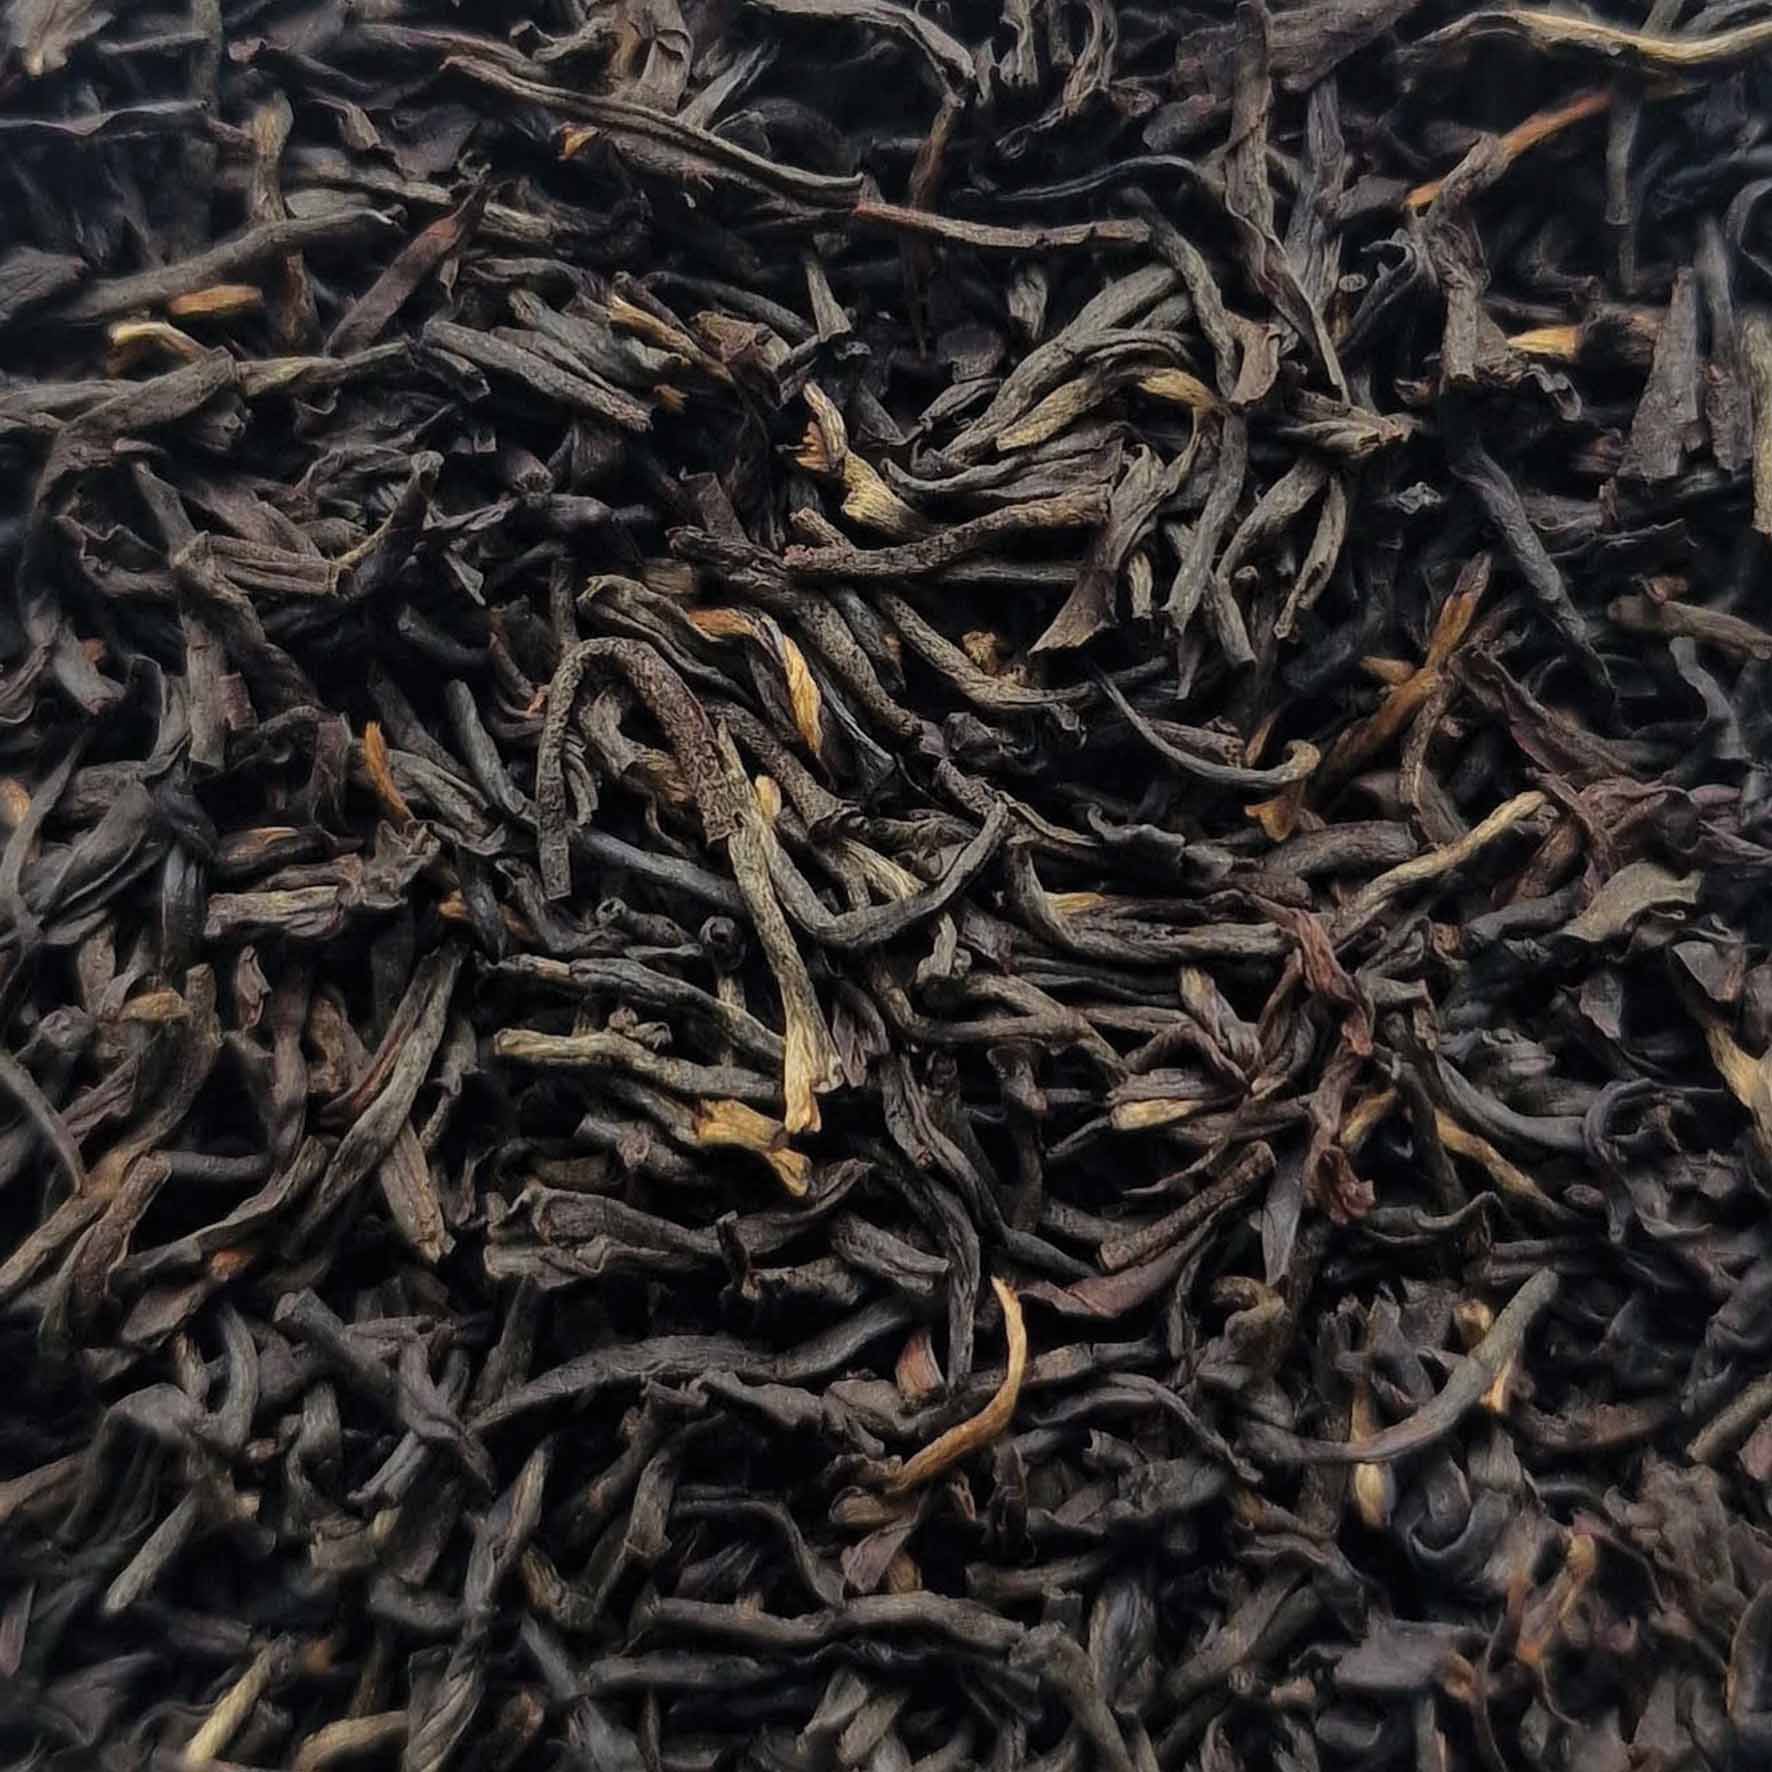 Premium Kenya Black Estate Loose Leaf Tea - one pouch